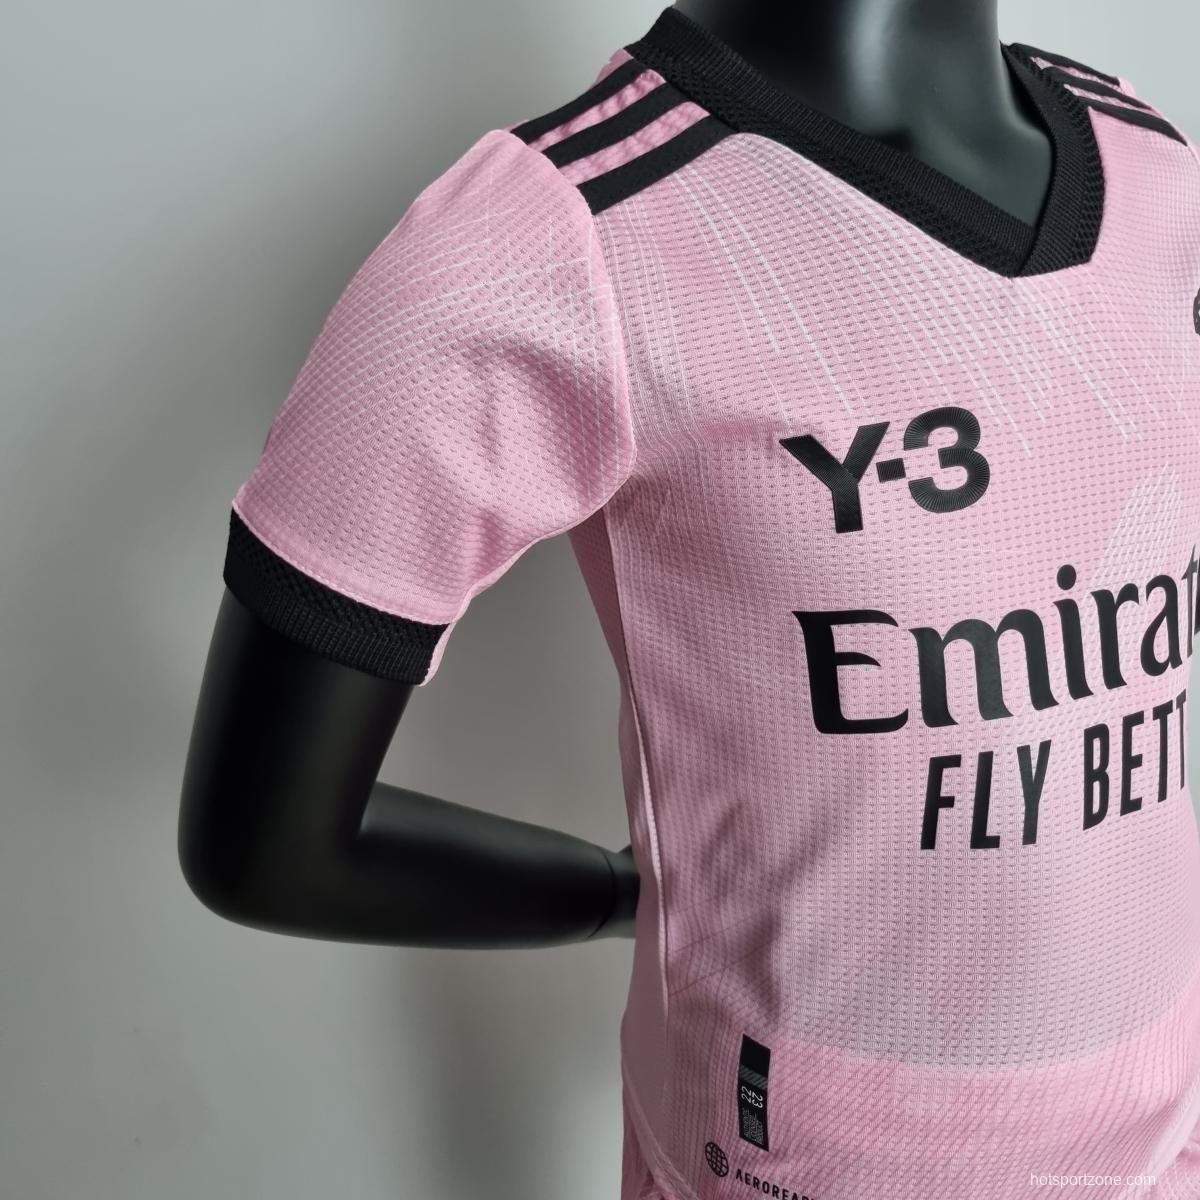 22/23 Real Madrid Y3 kids pink Soccer Jersey